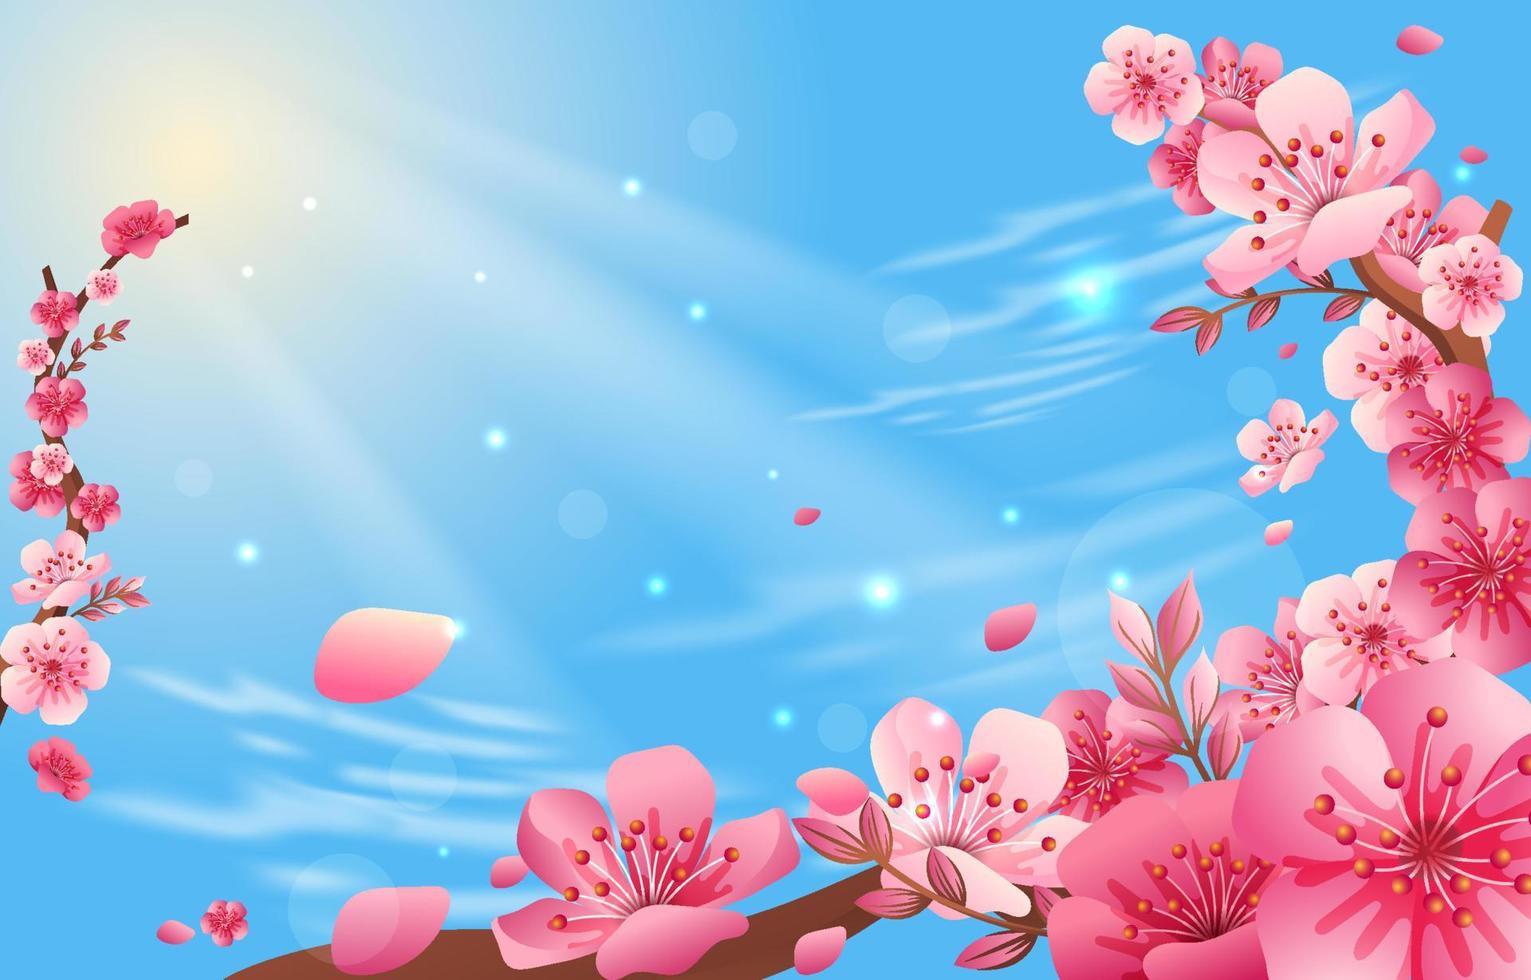 Peach Blossom Background vector